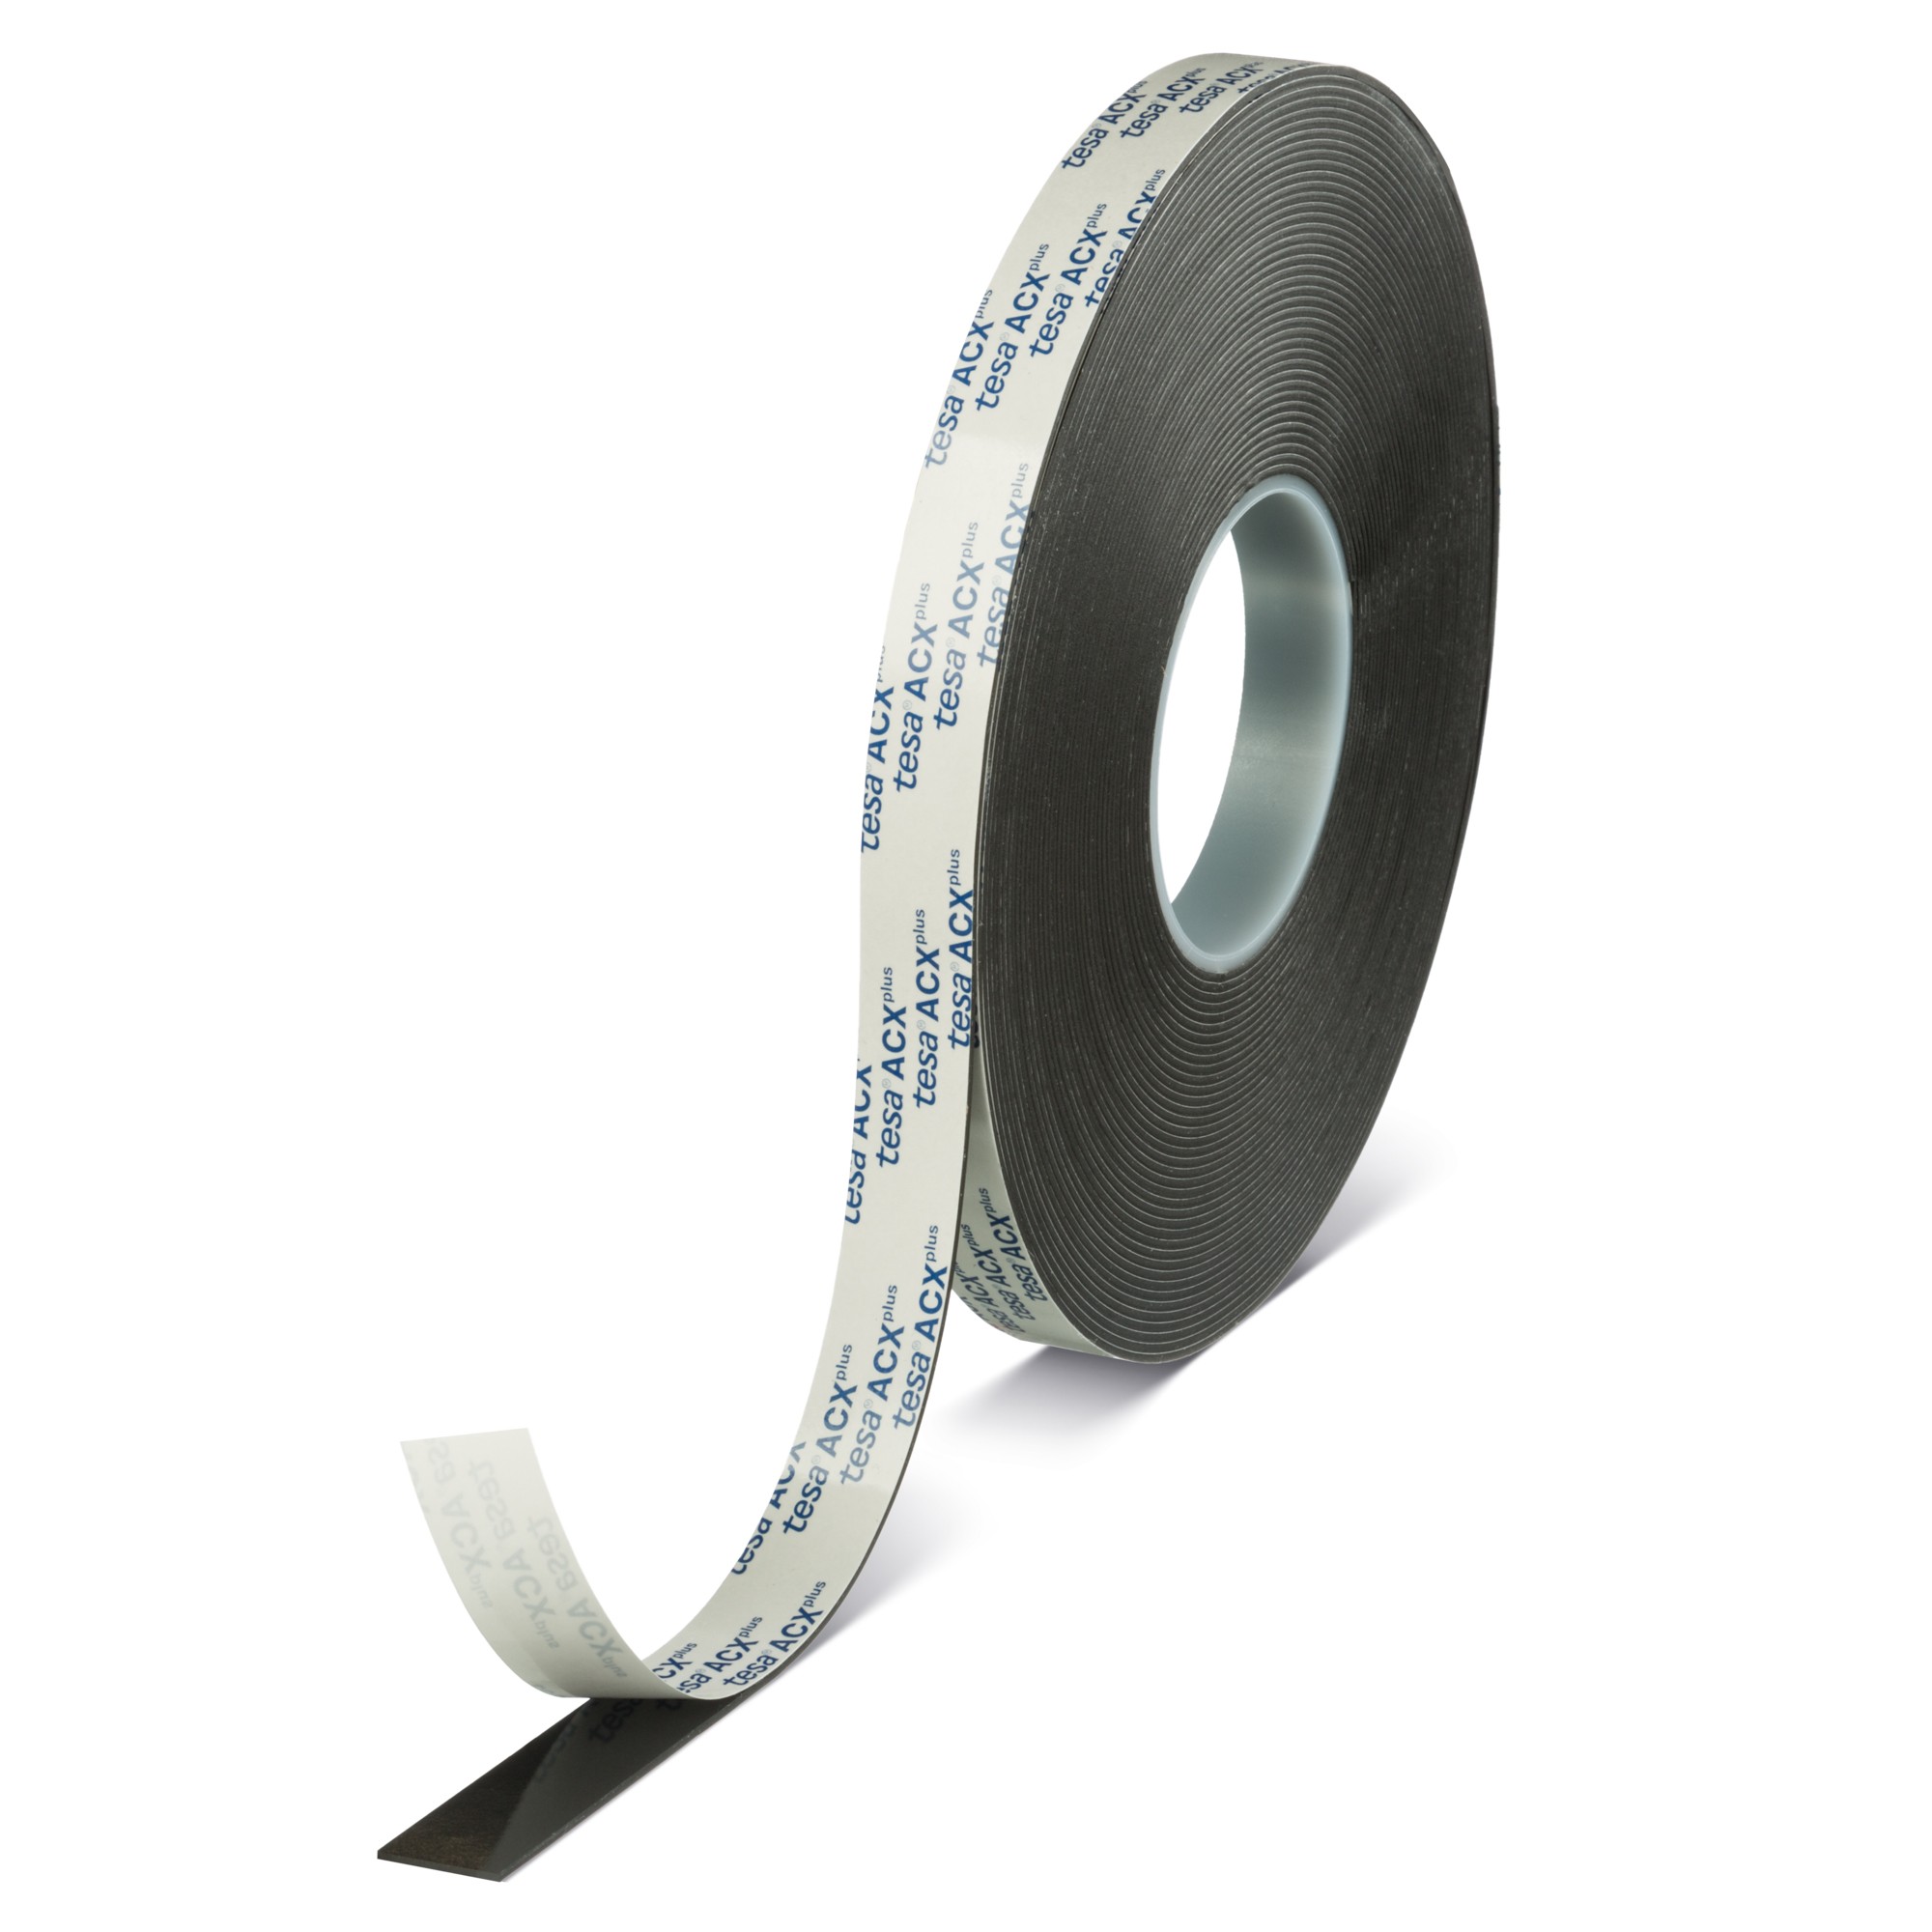 Acx Mp Acrylic Foam Tape 0 8mm Thick Tesa 7273 Shand Higson Co Ltd